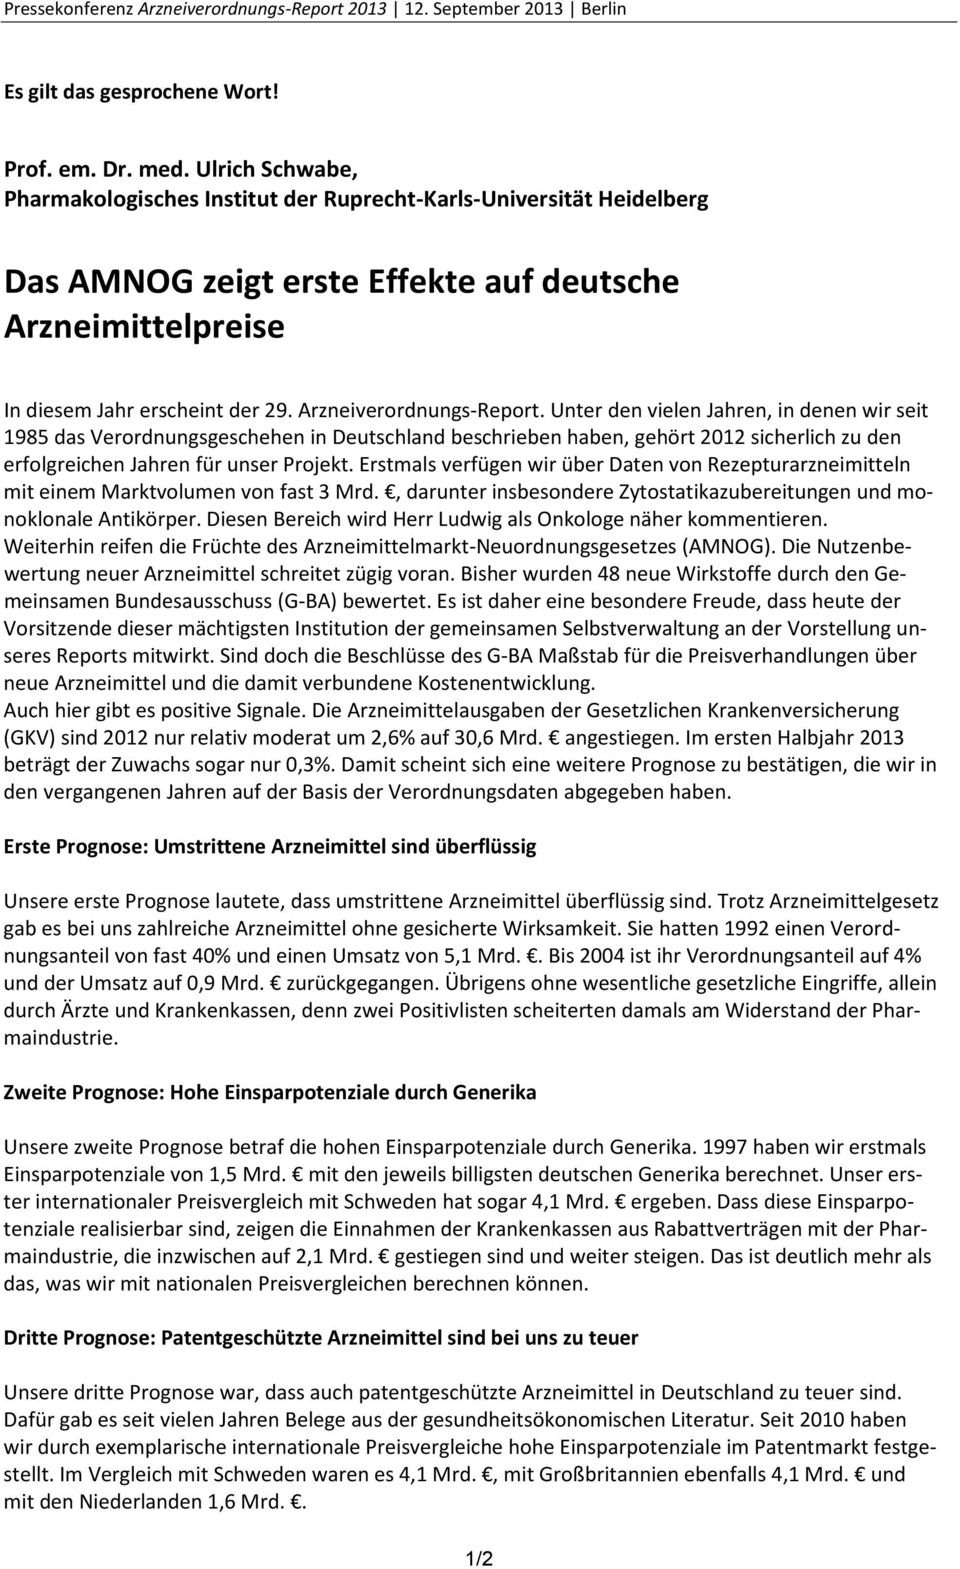 Arzneiverordnungs-Report.